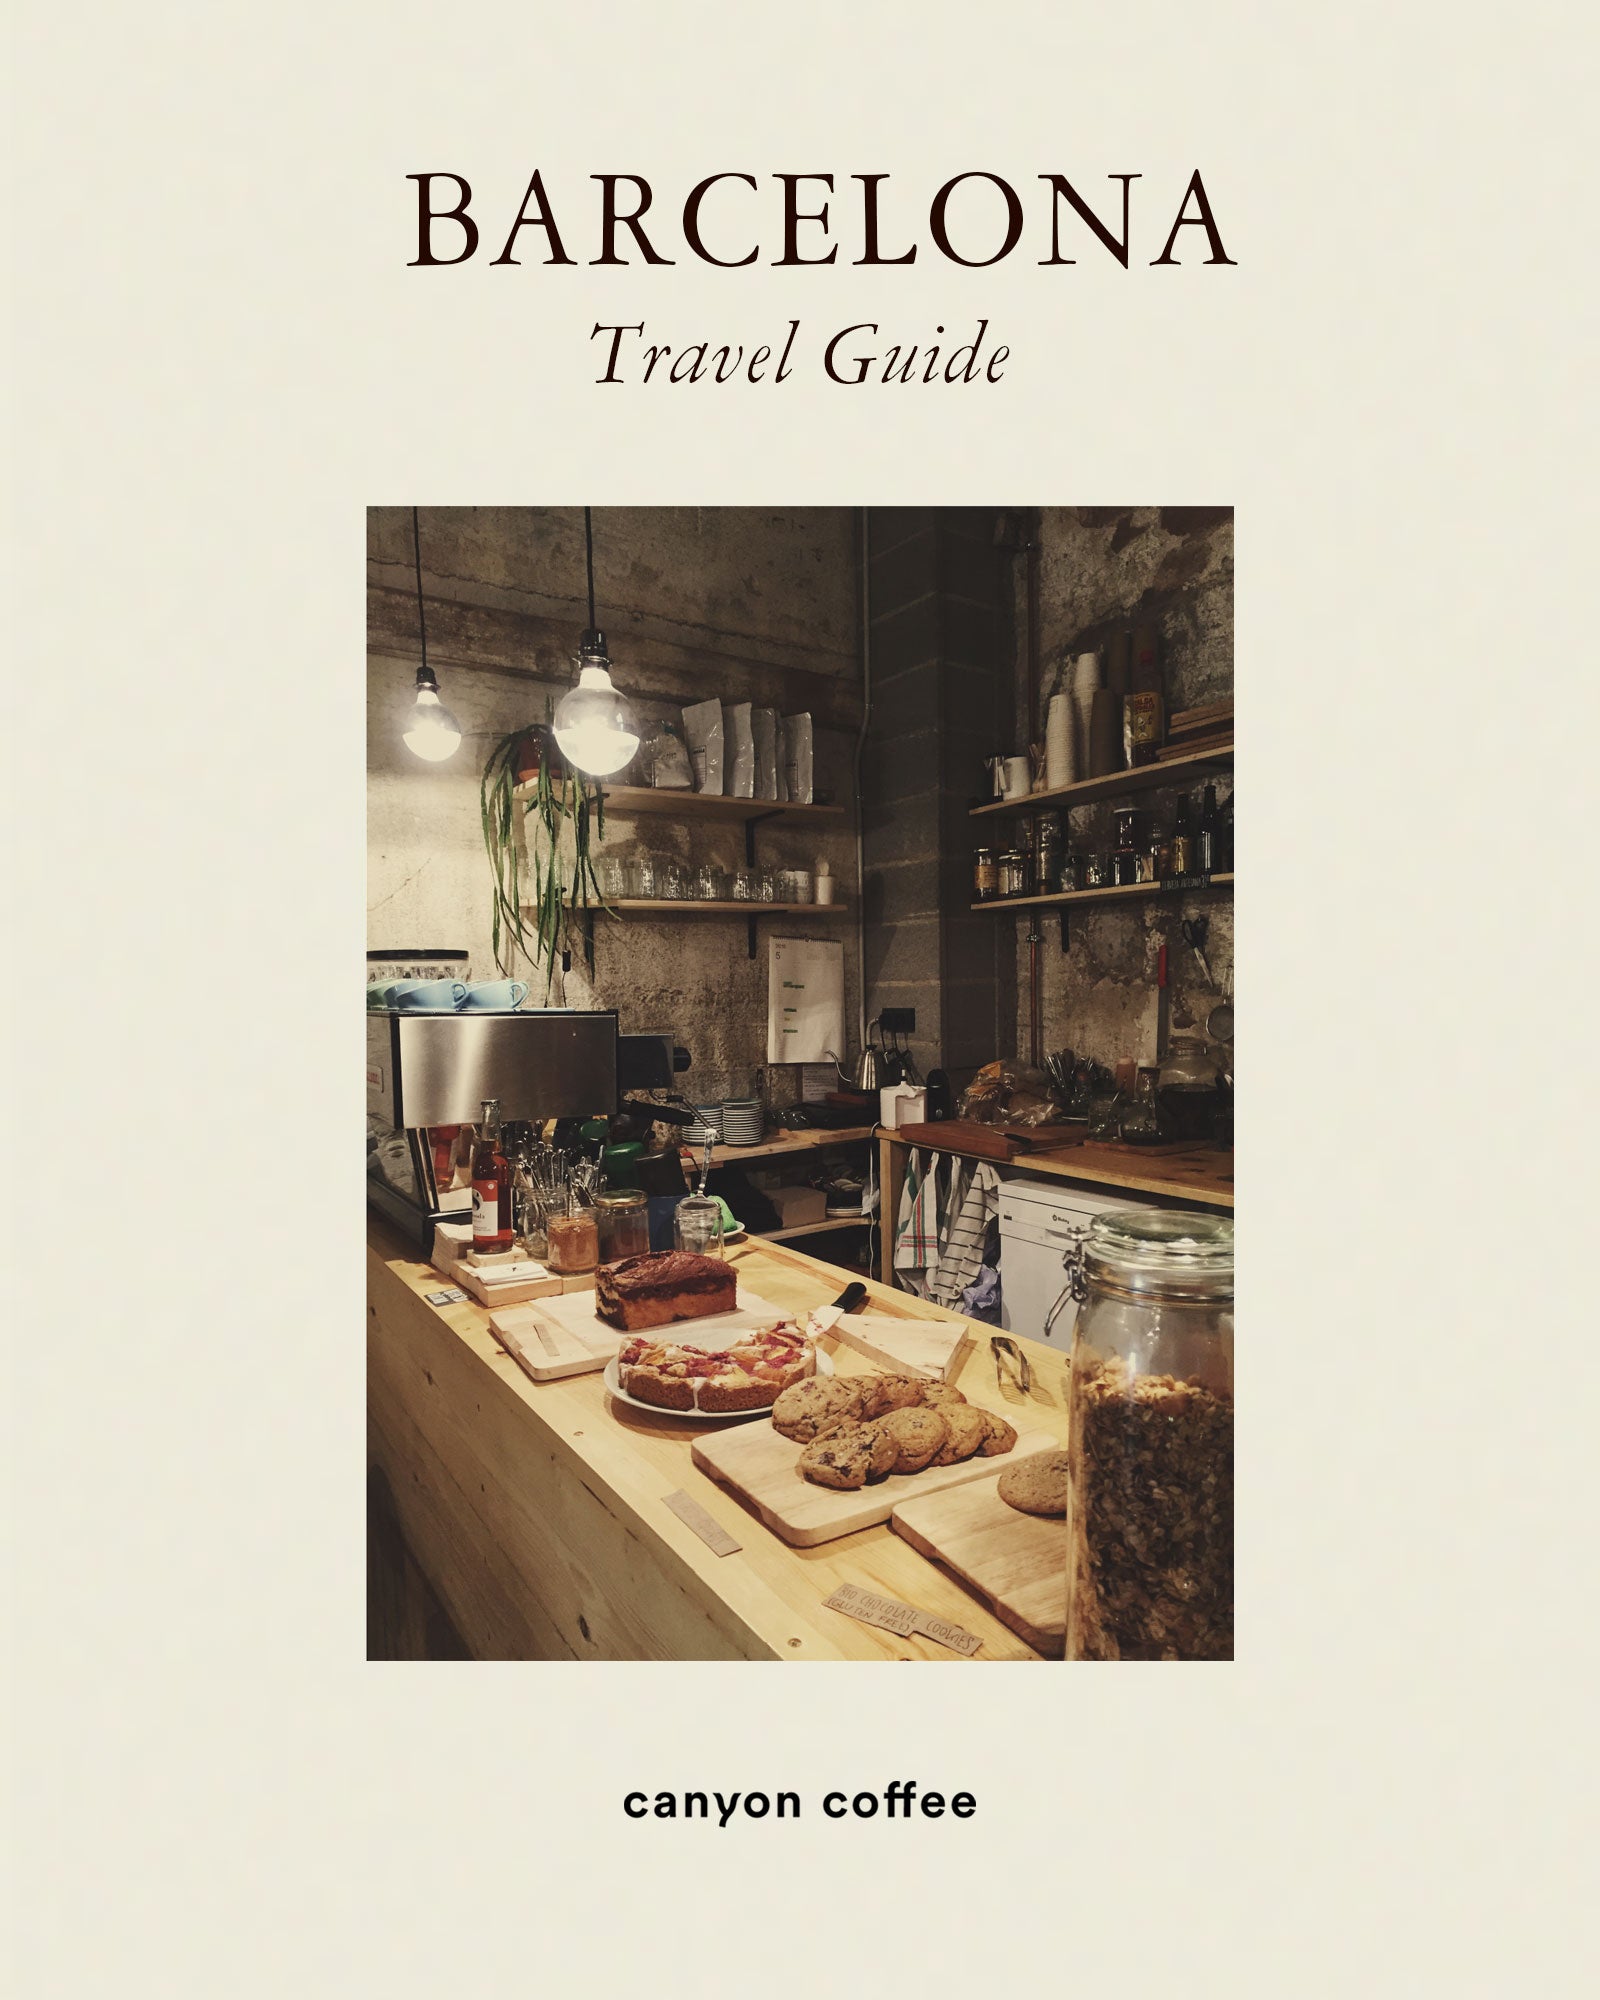 Barcelona coffee guide, by Canyon Coffee